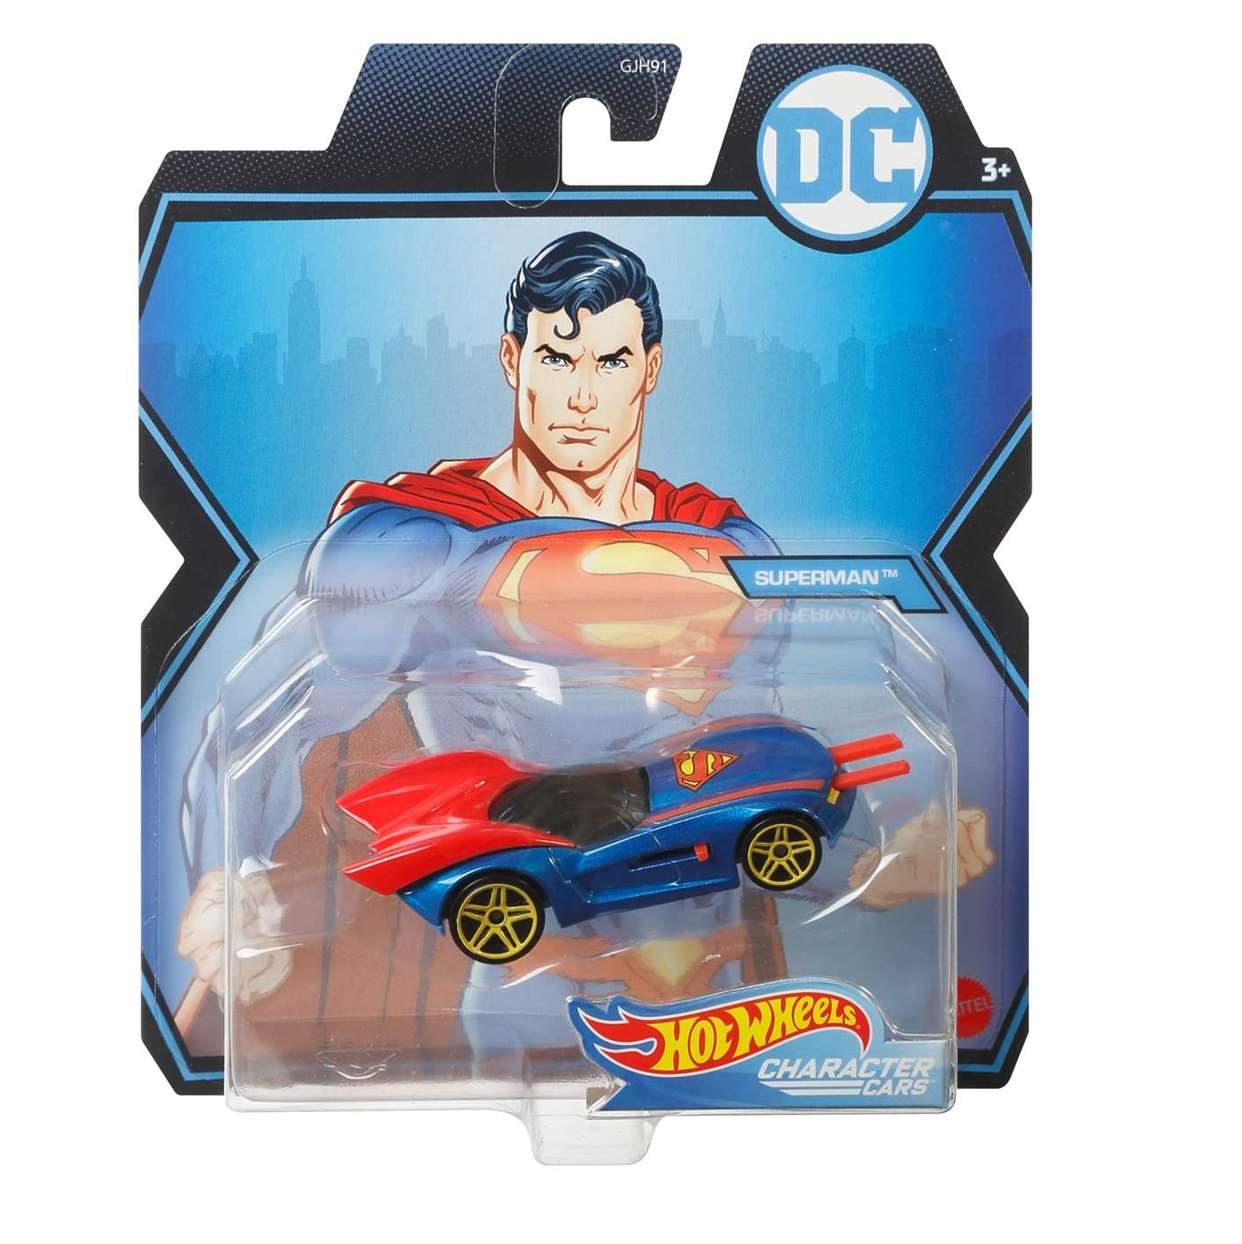 Superman Gmh96 Hot Wheels Character Cars Die Cast